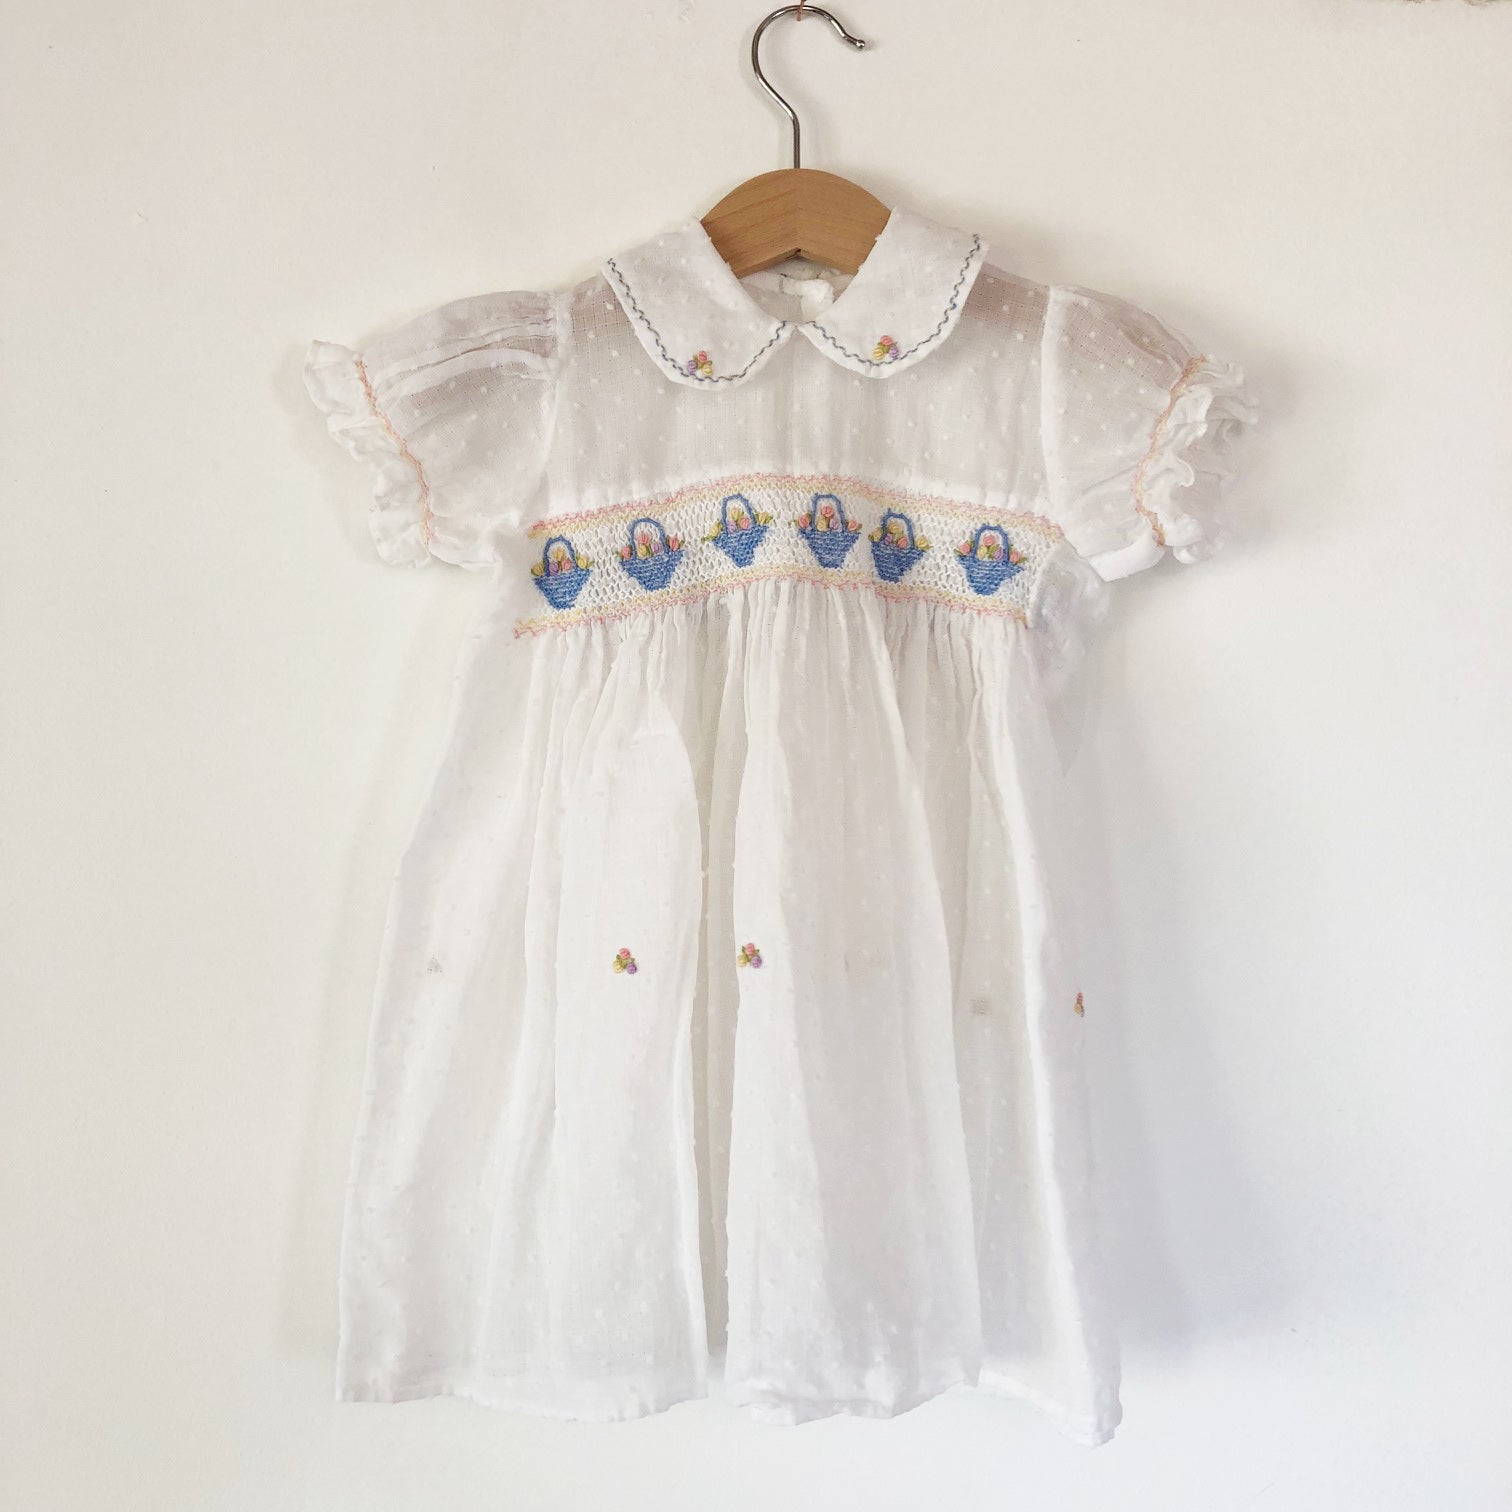 Embroidered Little Polka Dot Dress size 12 months